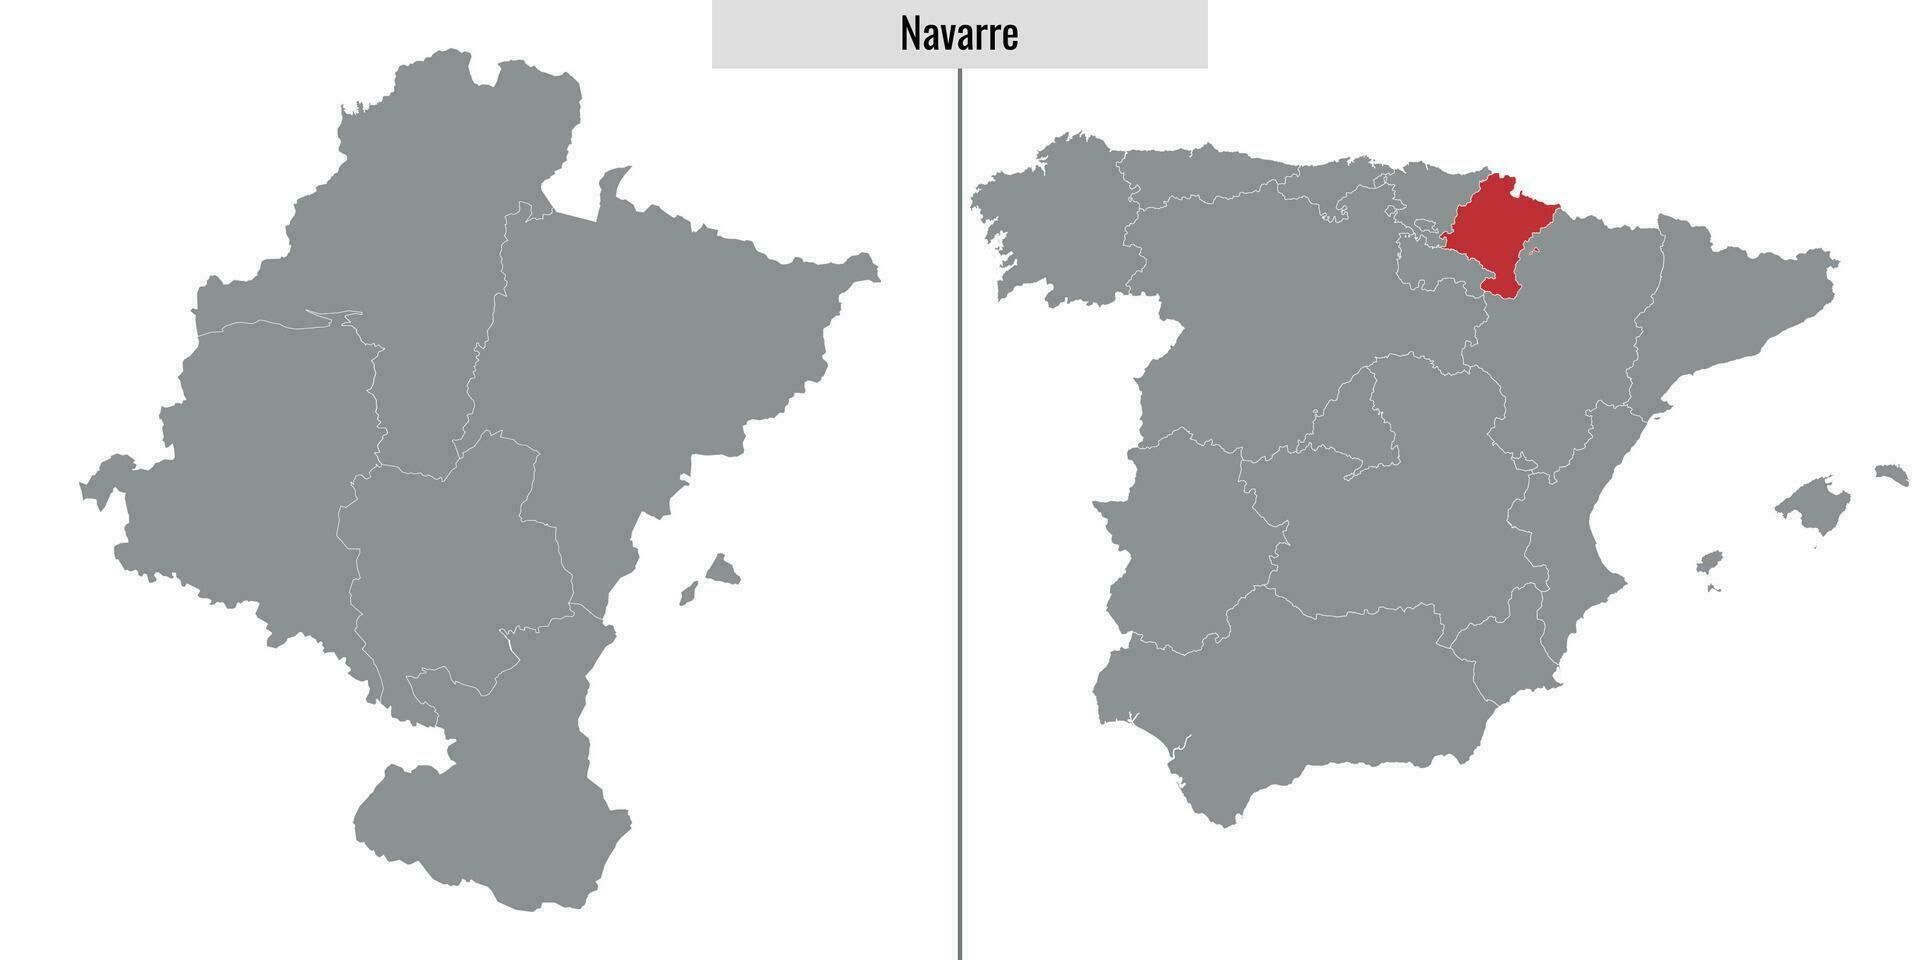 mapa región de España vector